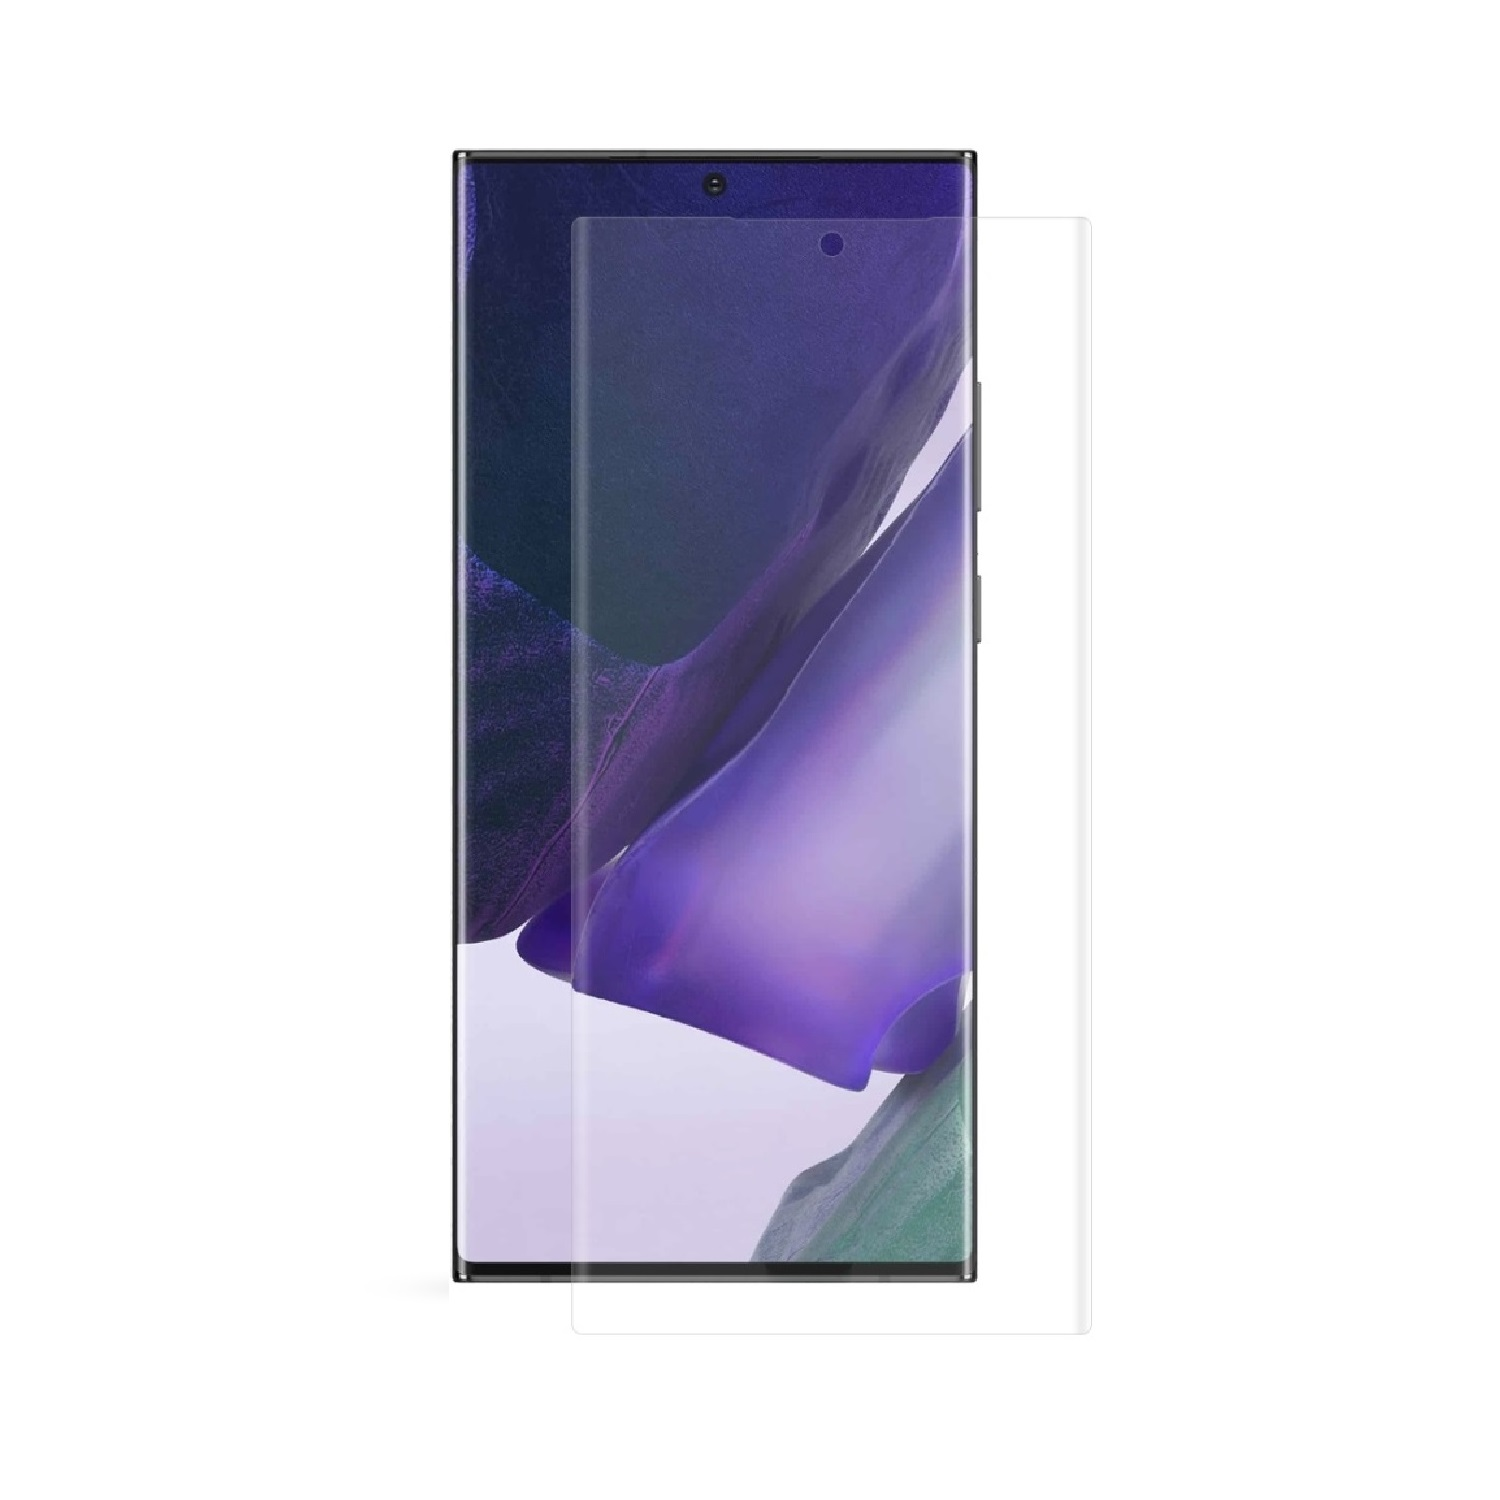 KLAR FULL CURVED PROTECTORKING HD Samsung Displayschutzfolie(für 9H Galaxy 20 3x Ultra) Note Hartglas